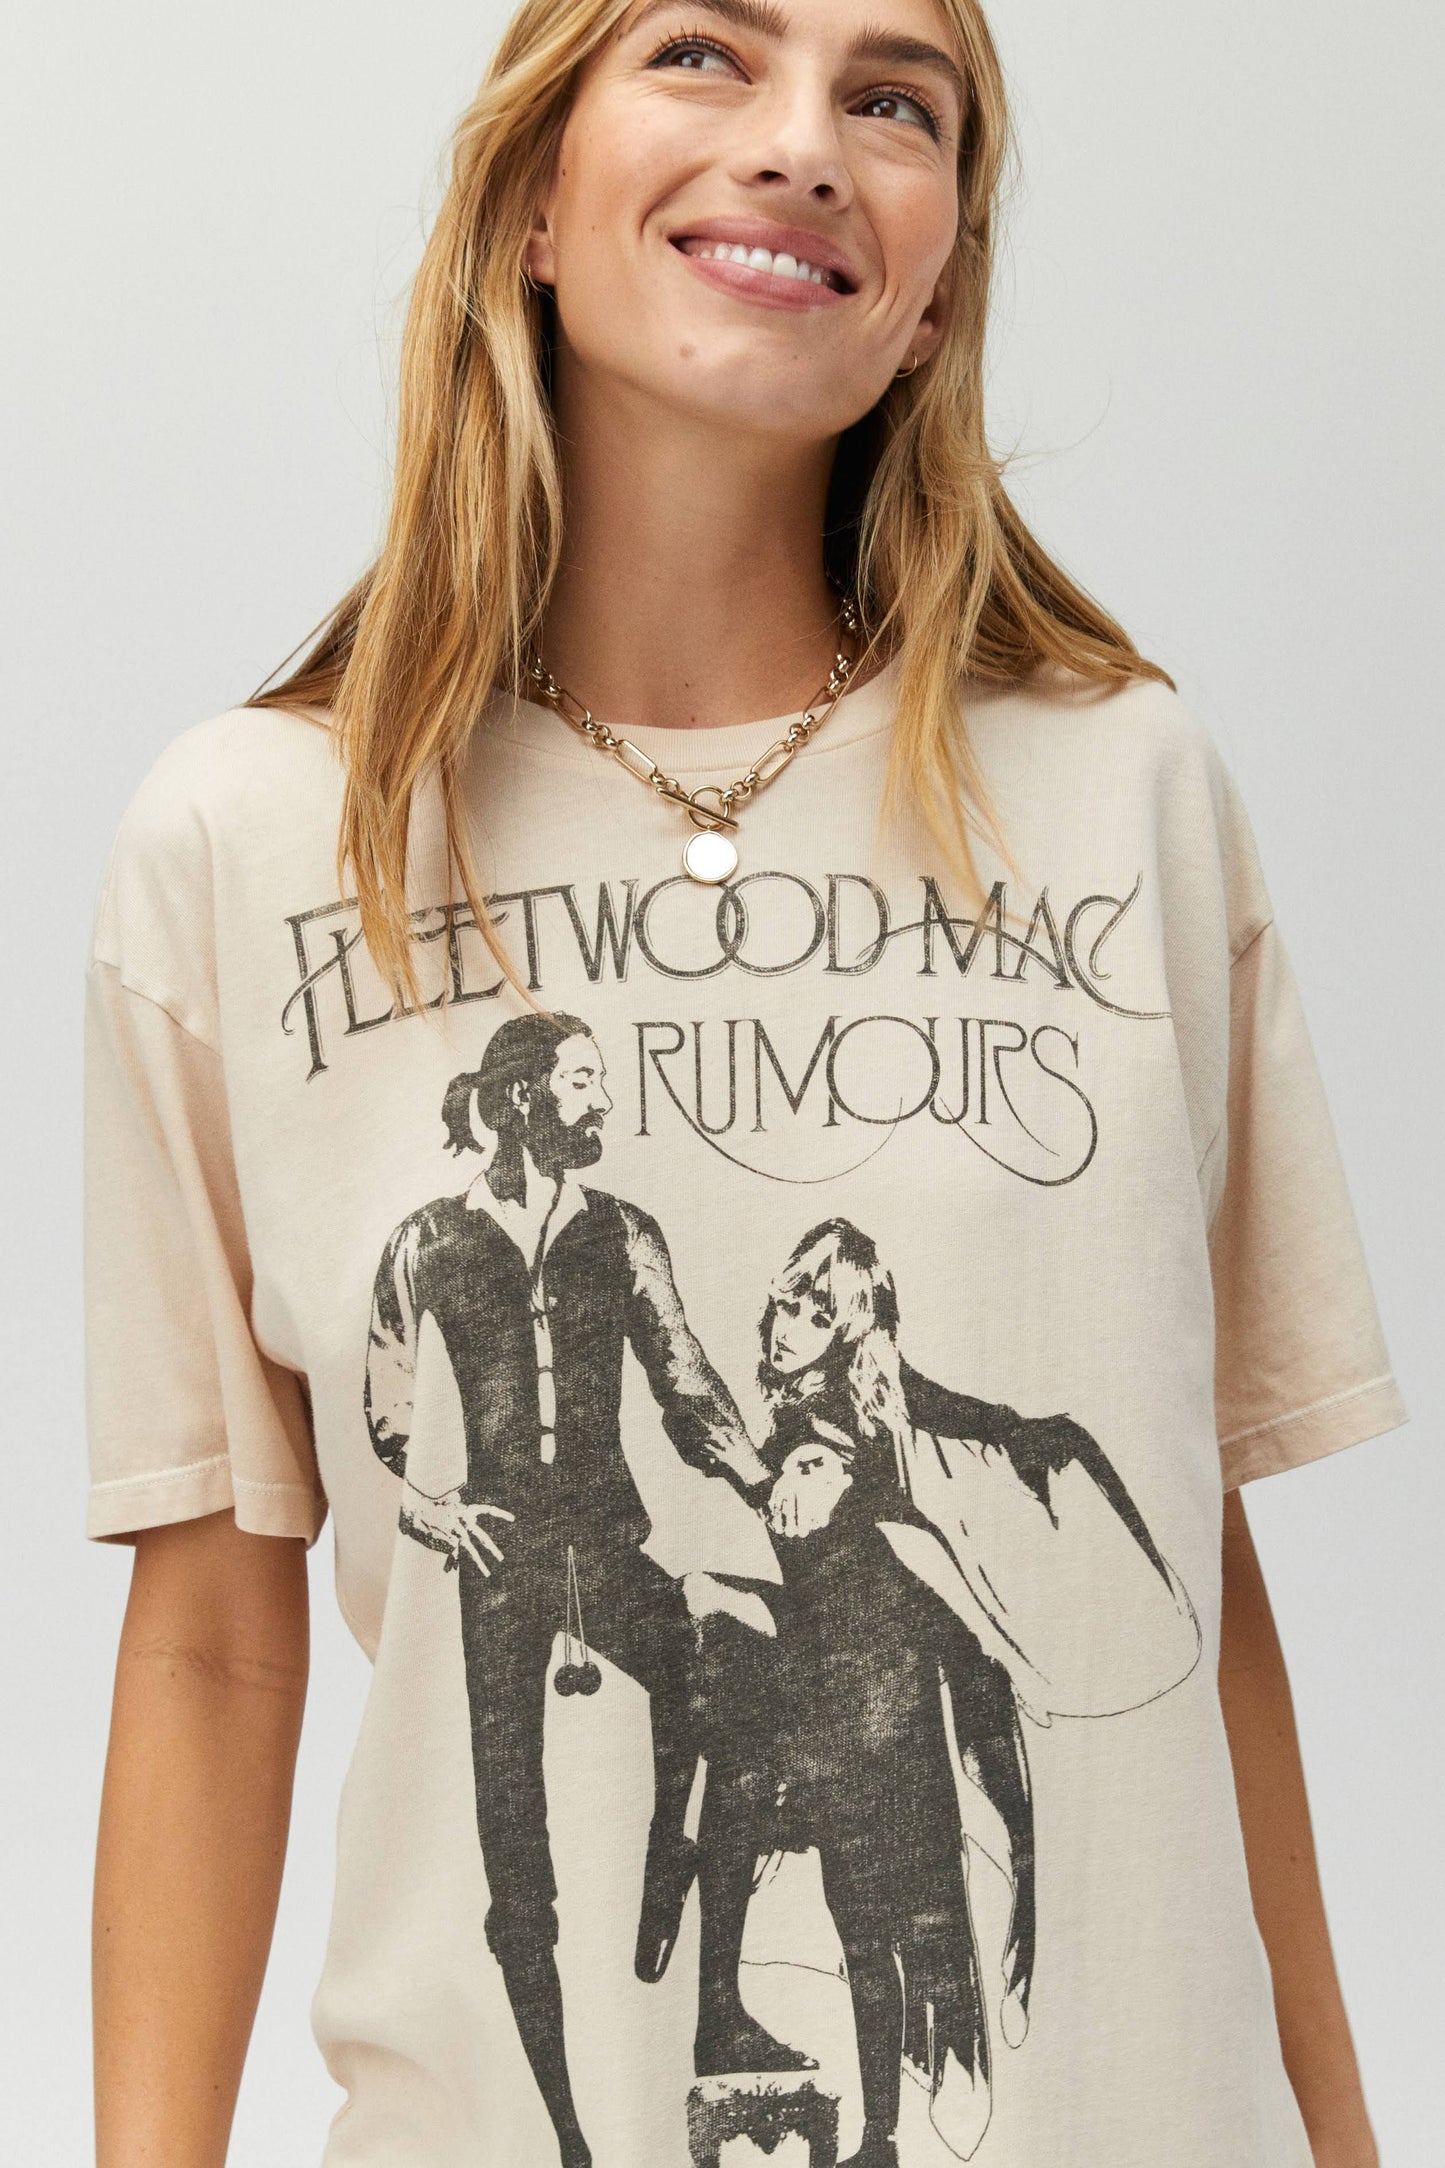 Fleetwood Mac Rumors Tee Dress in Sand